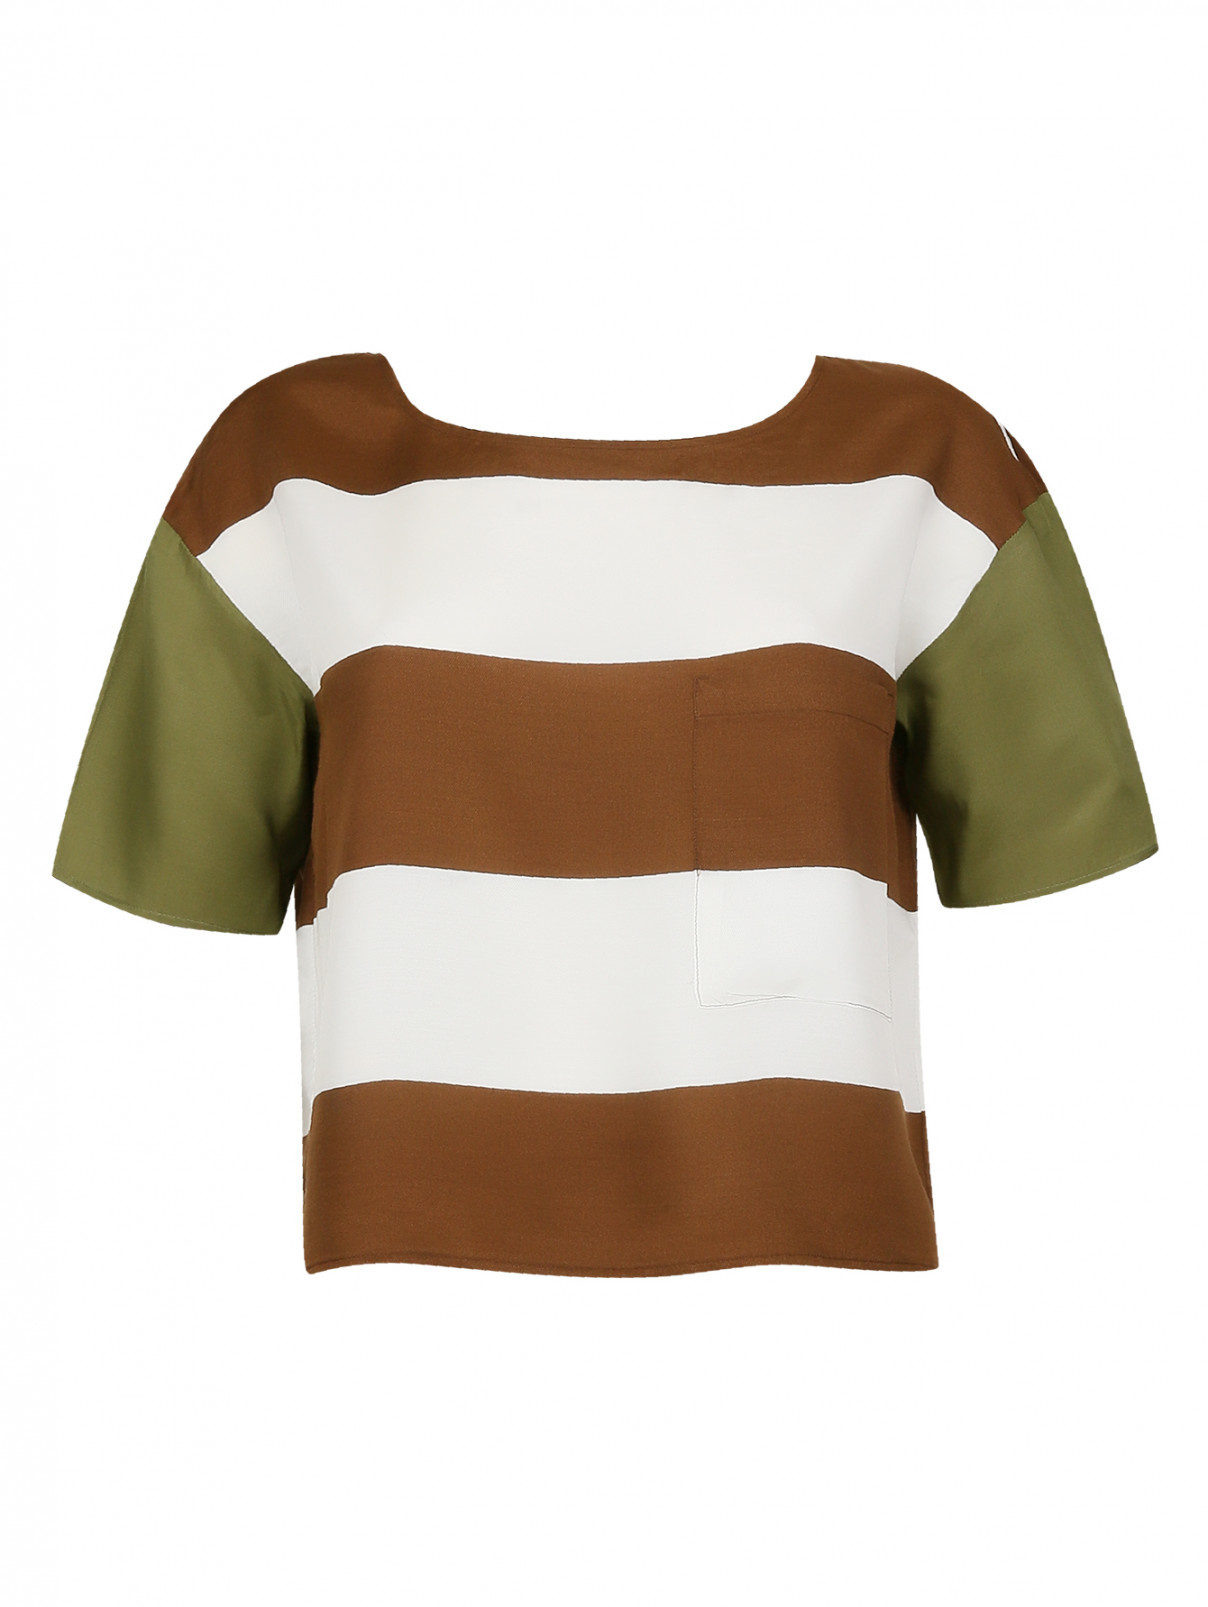 Блуза с узором  "полоска" Max&Co  –  Общий вид  – Цвет:  Узор